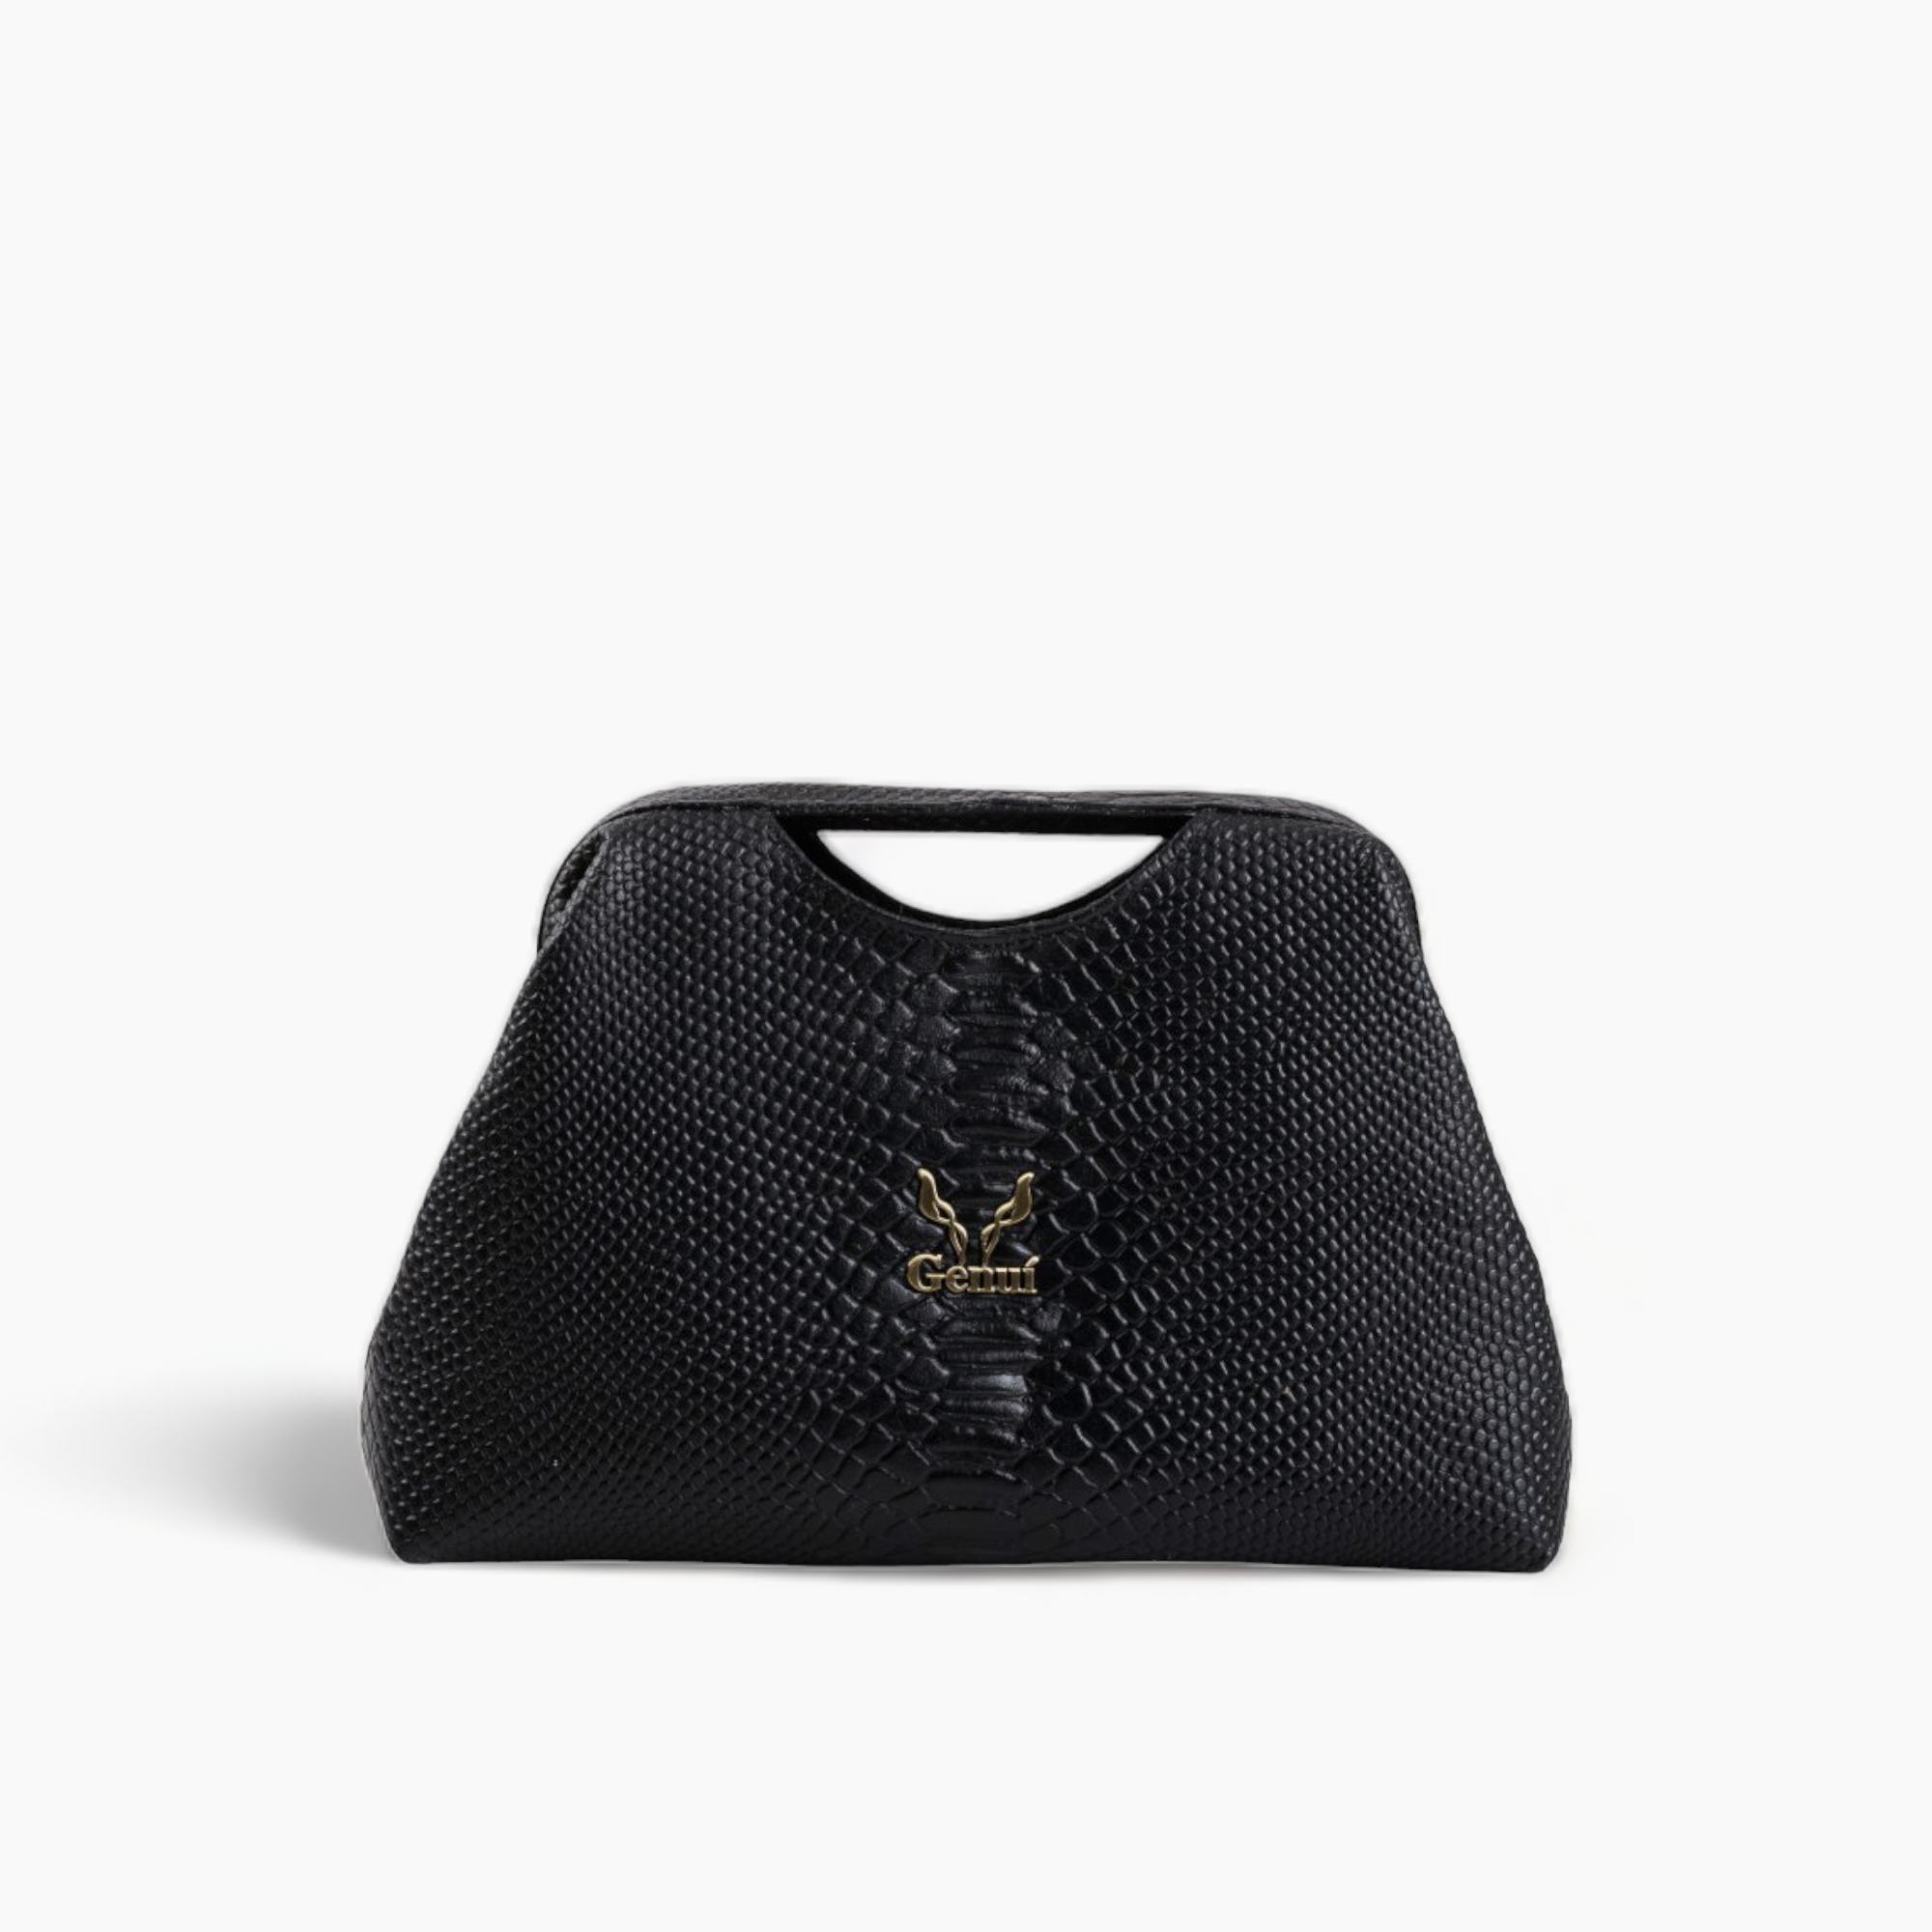 Leather black handbag